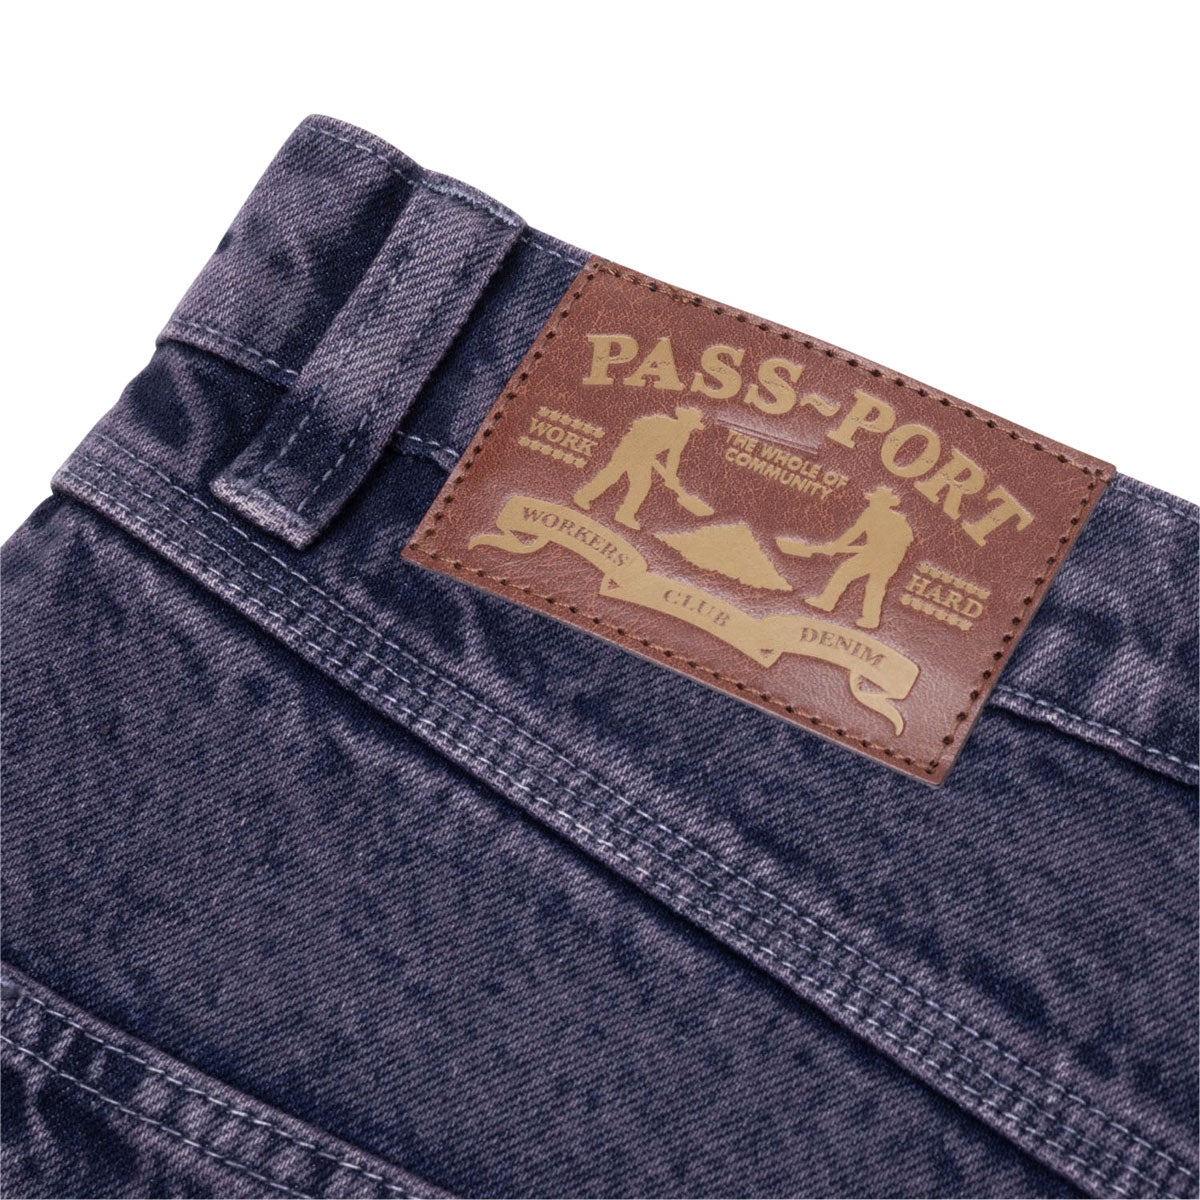 Passport Denim Workers Club Shorts - Purple Over-Dye image 4